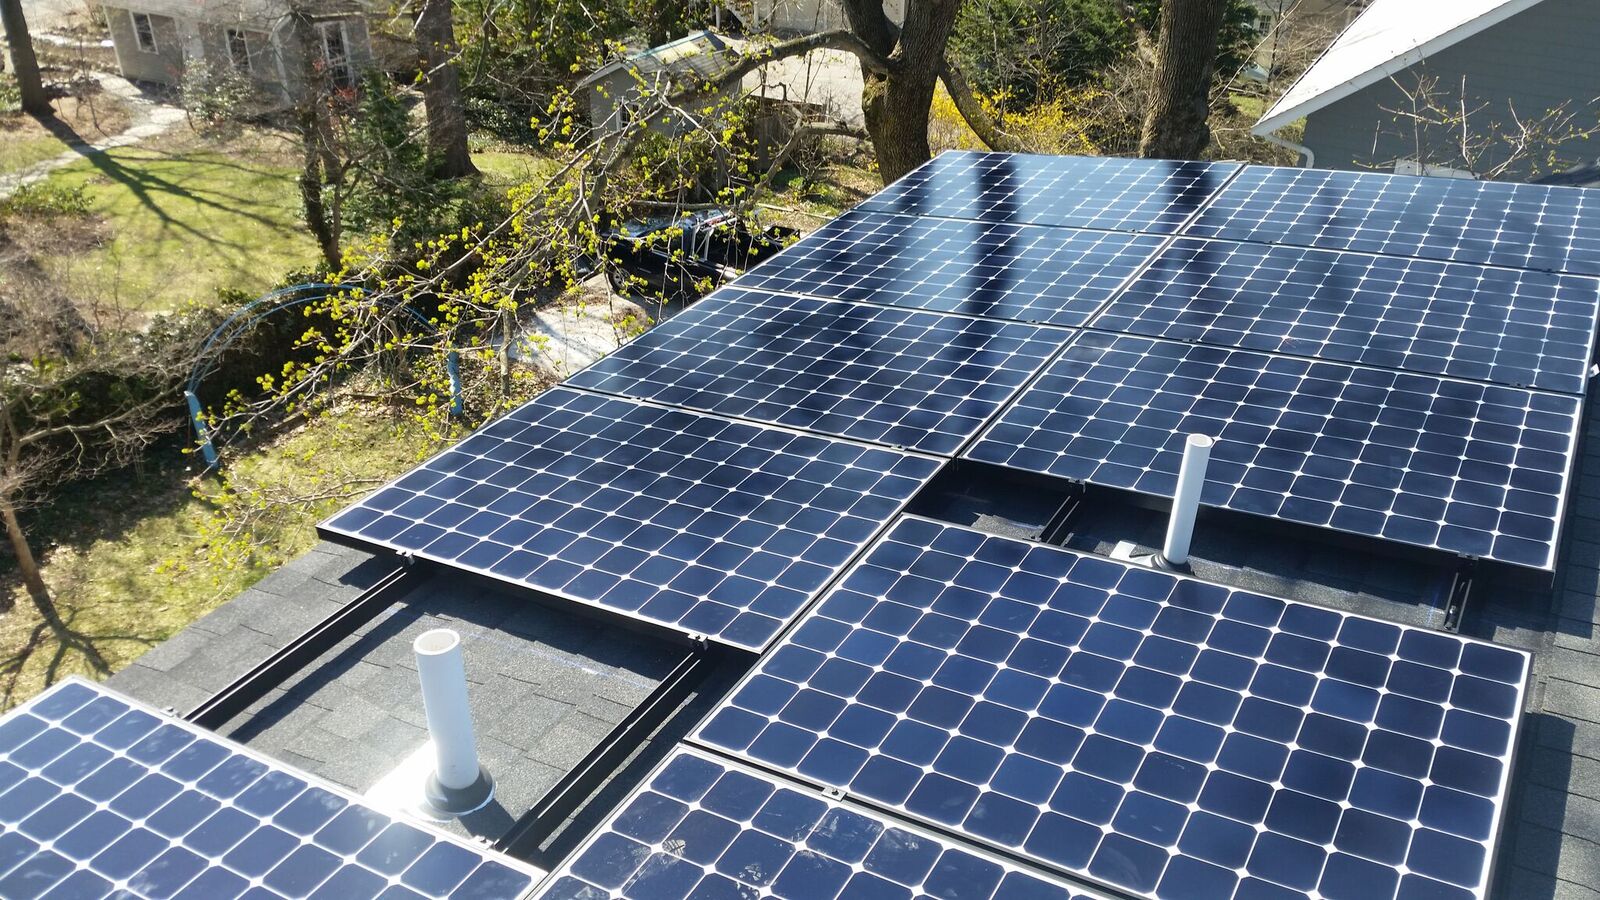 Garfield Street Solar Installation Photo